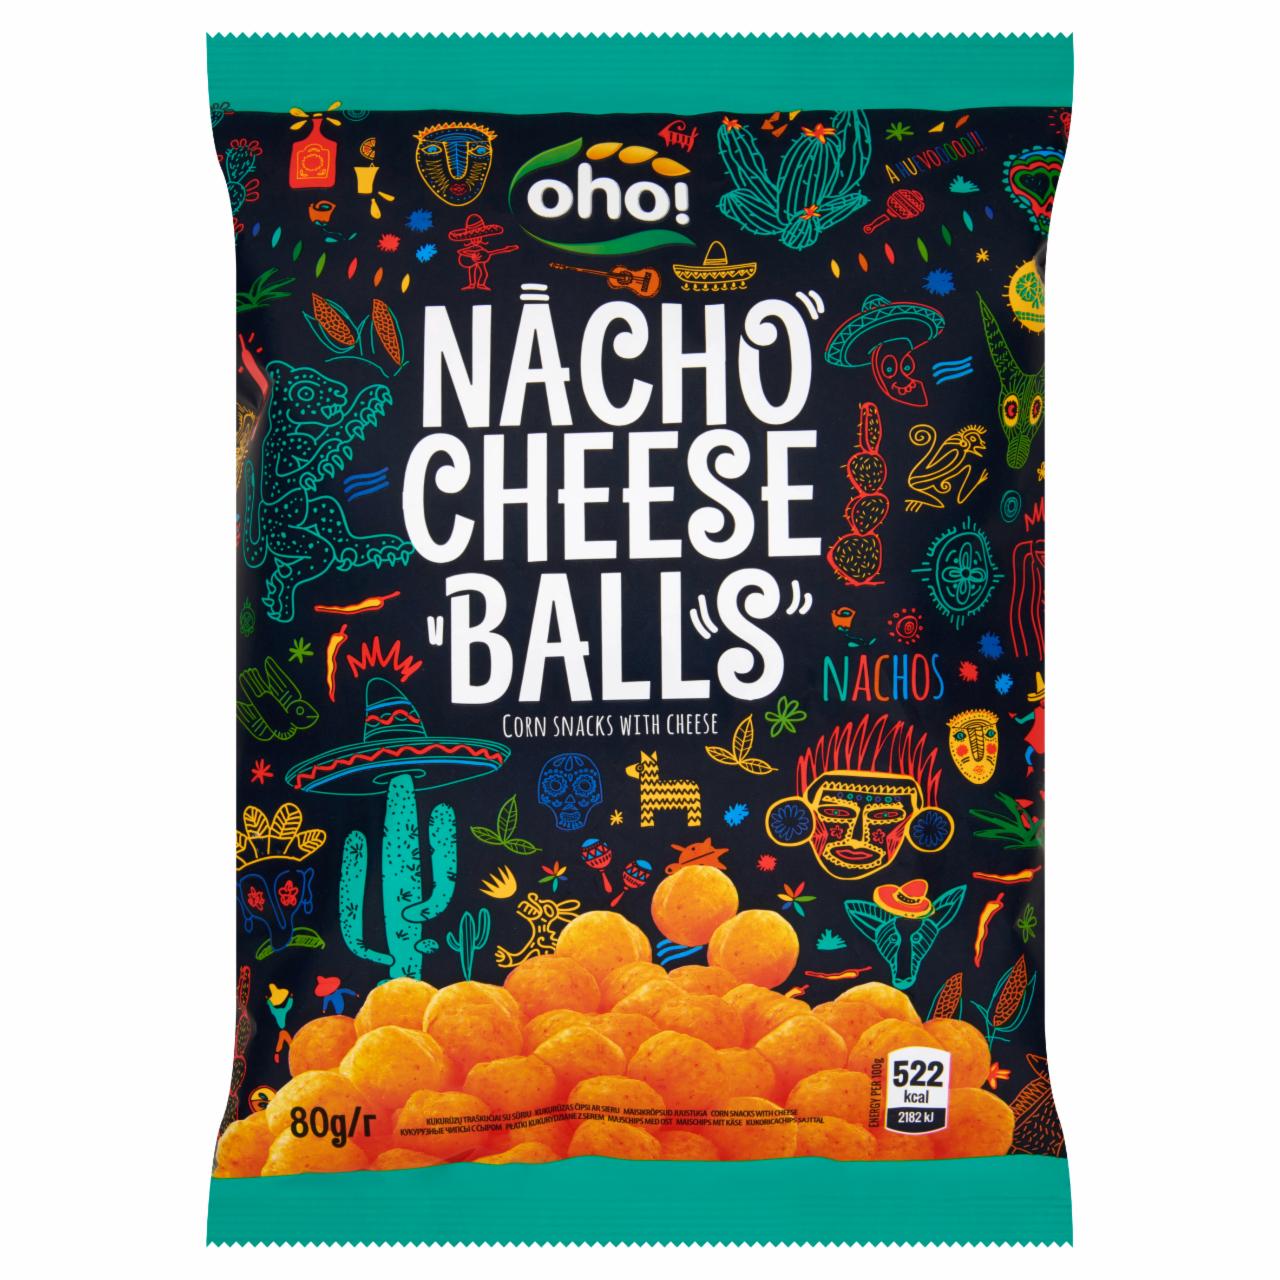 Képek - Oho! Nacho Cheese Balls kukoricachips sajttal 80 g